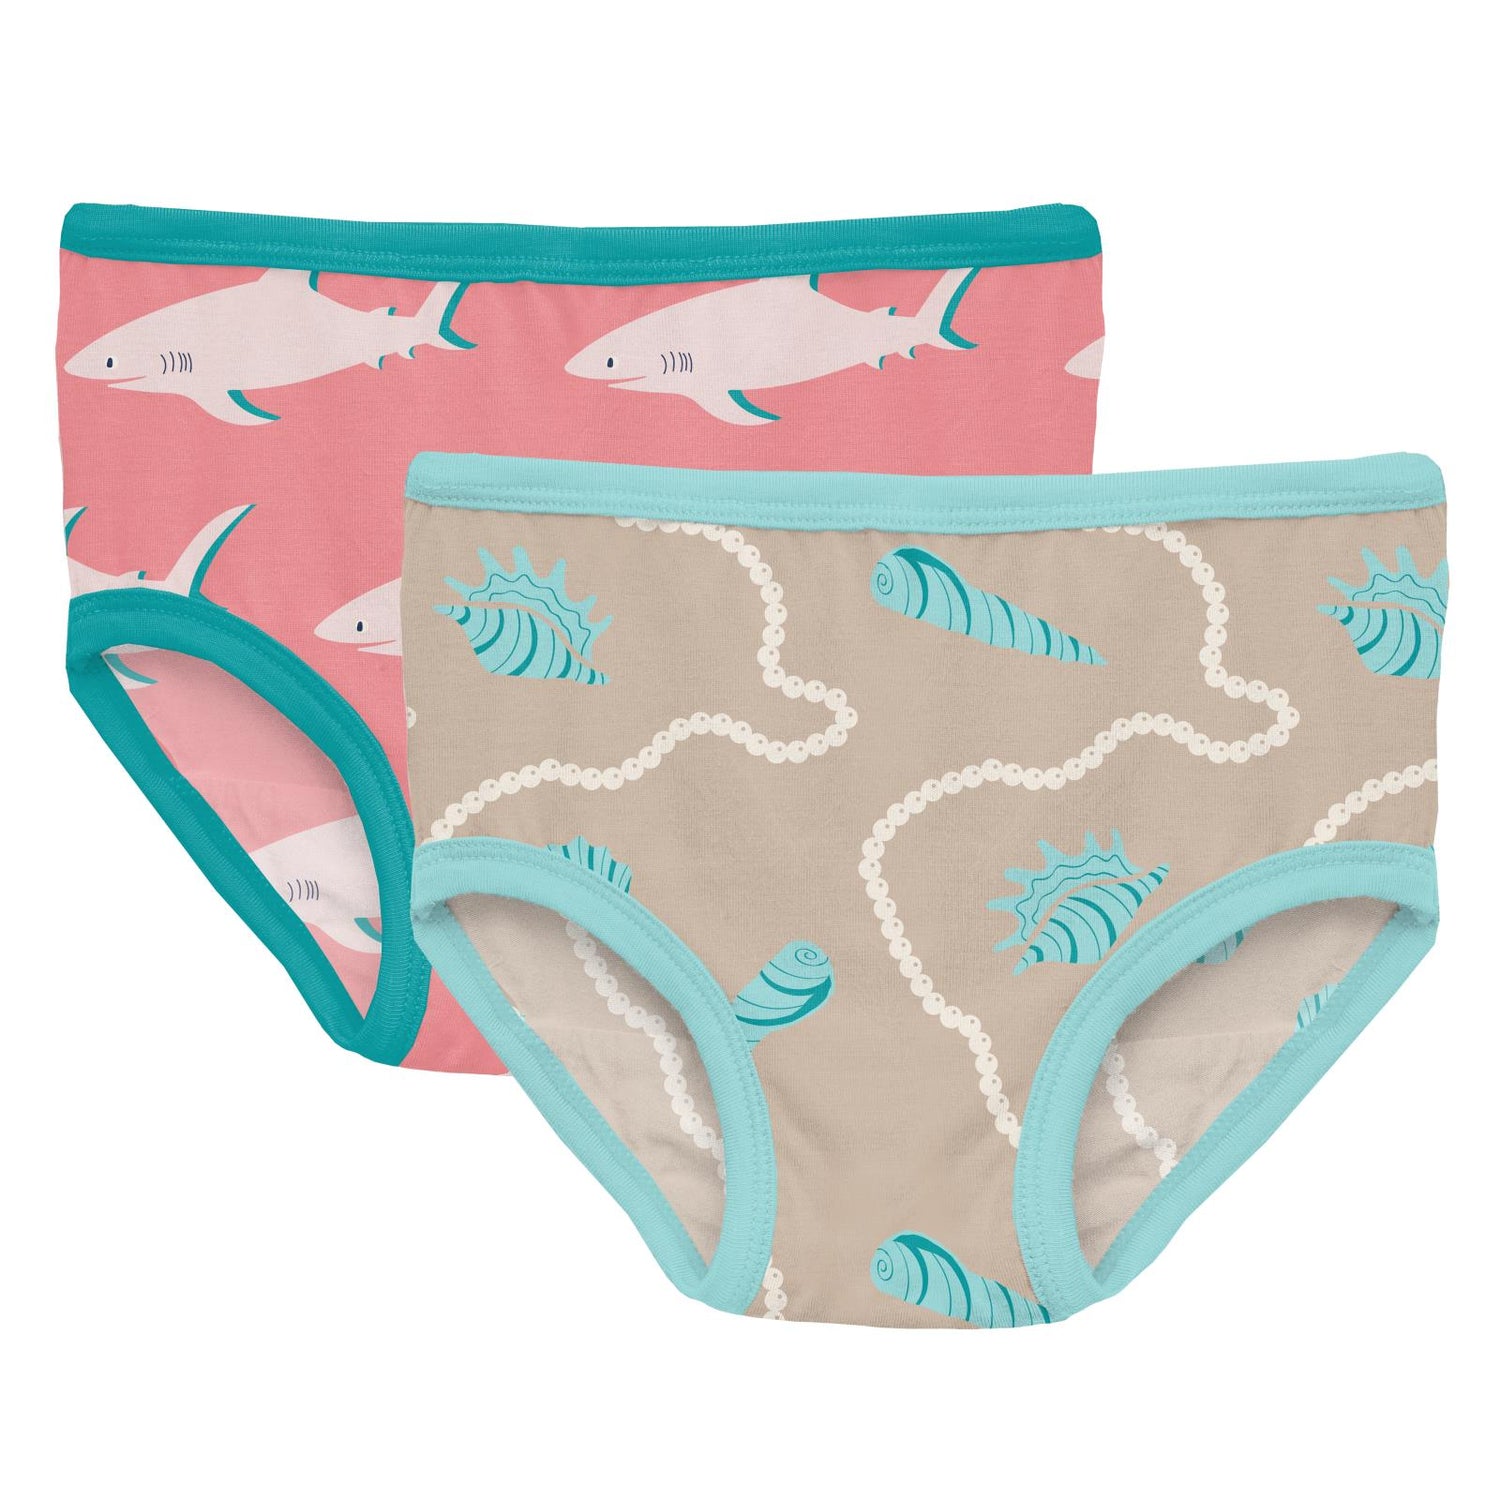 Underwear Set in Strawberry Sharky & Burlap Shells